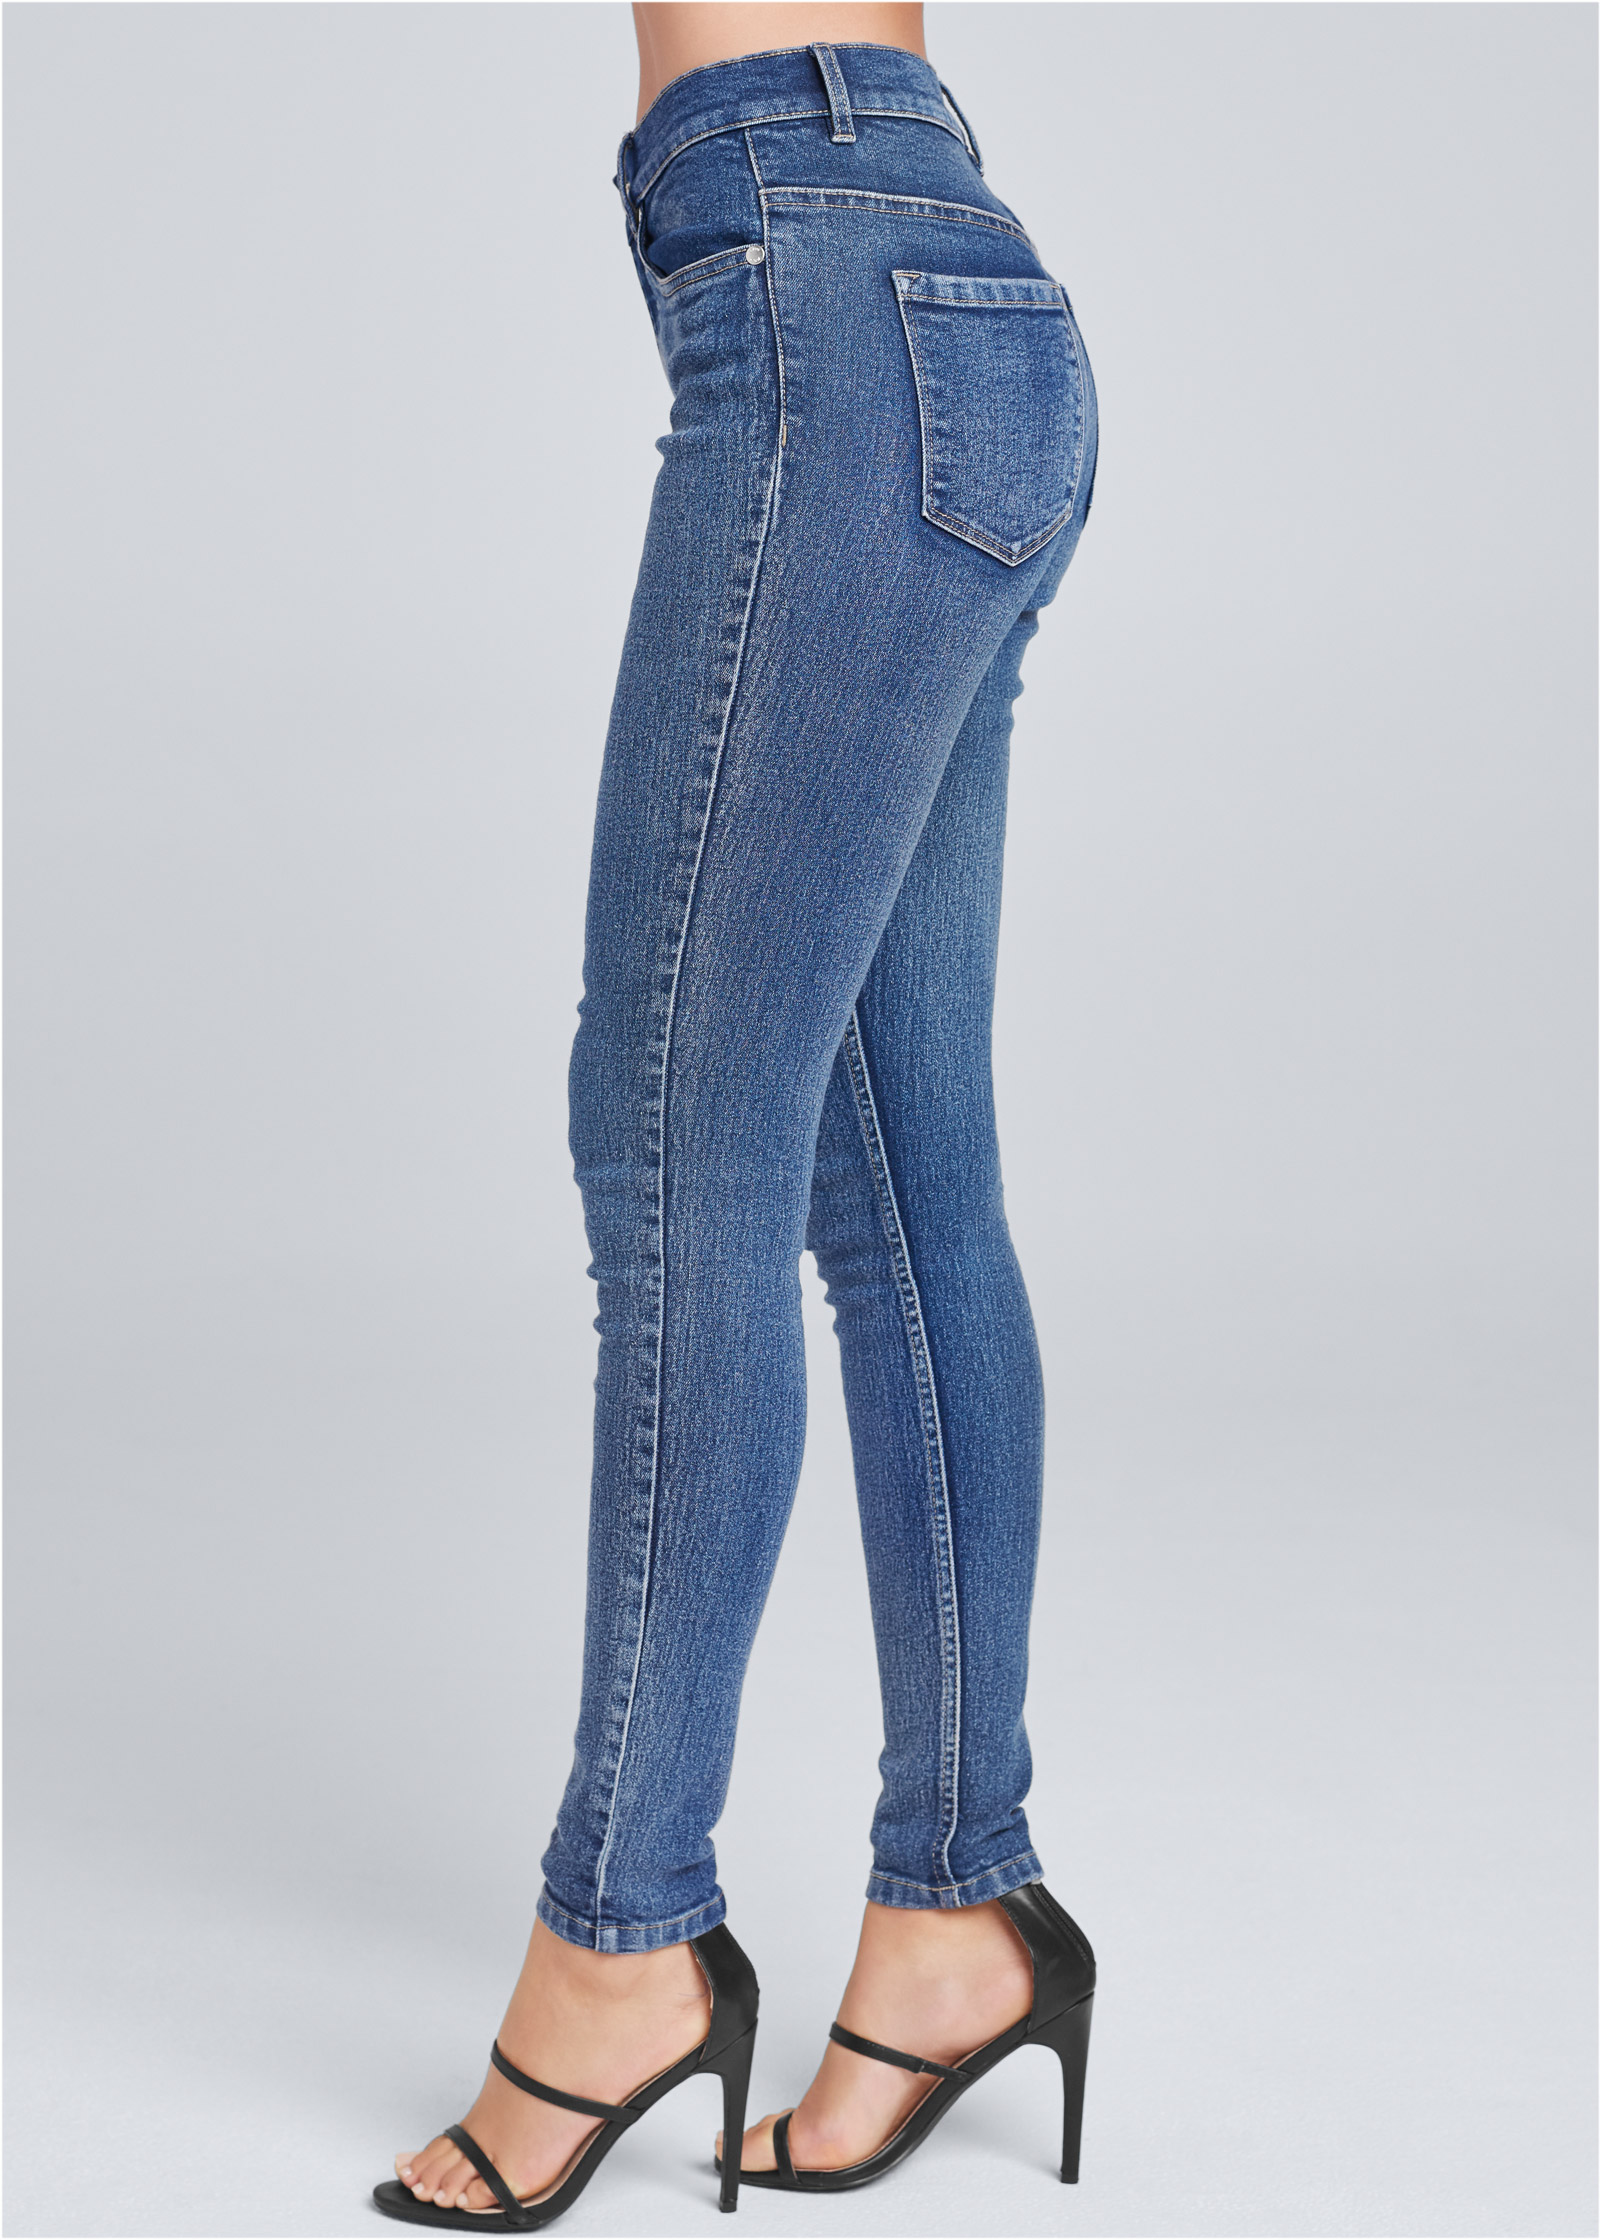 L Women's Faux Leather & Blue Denim Slim Skinny Stretch Jeans US 6/8 